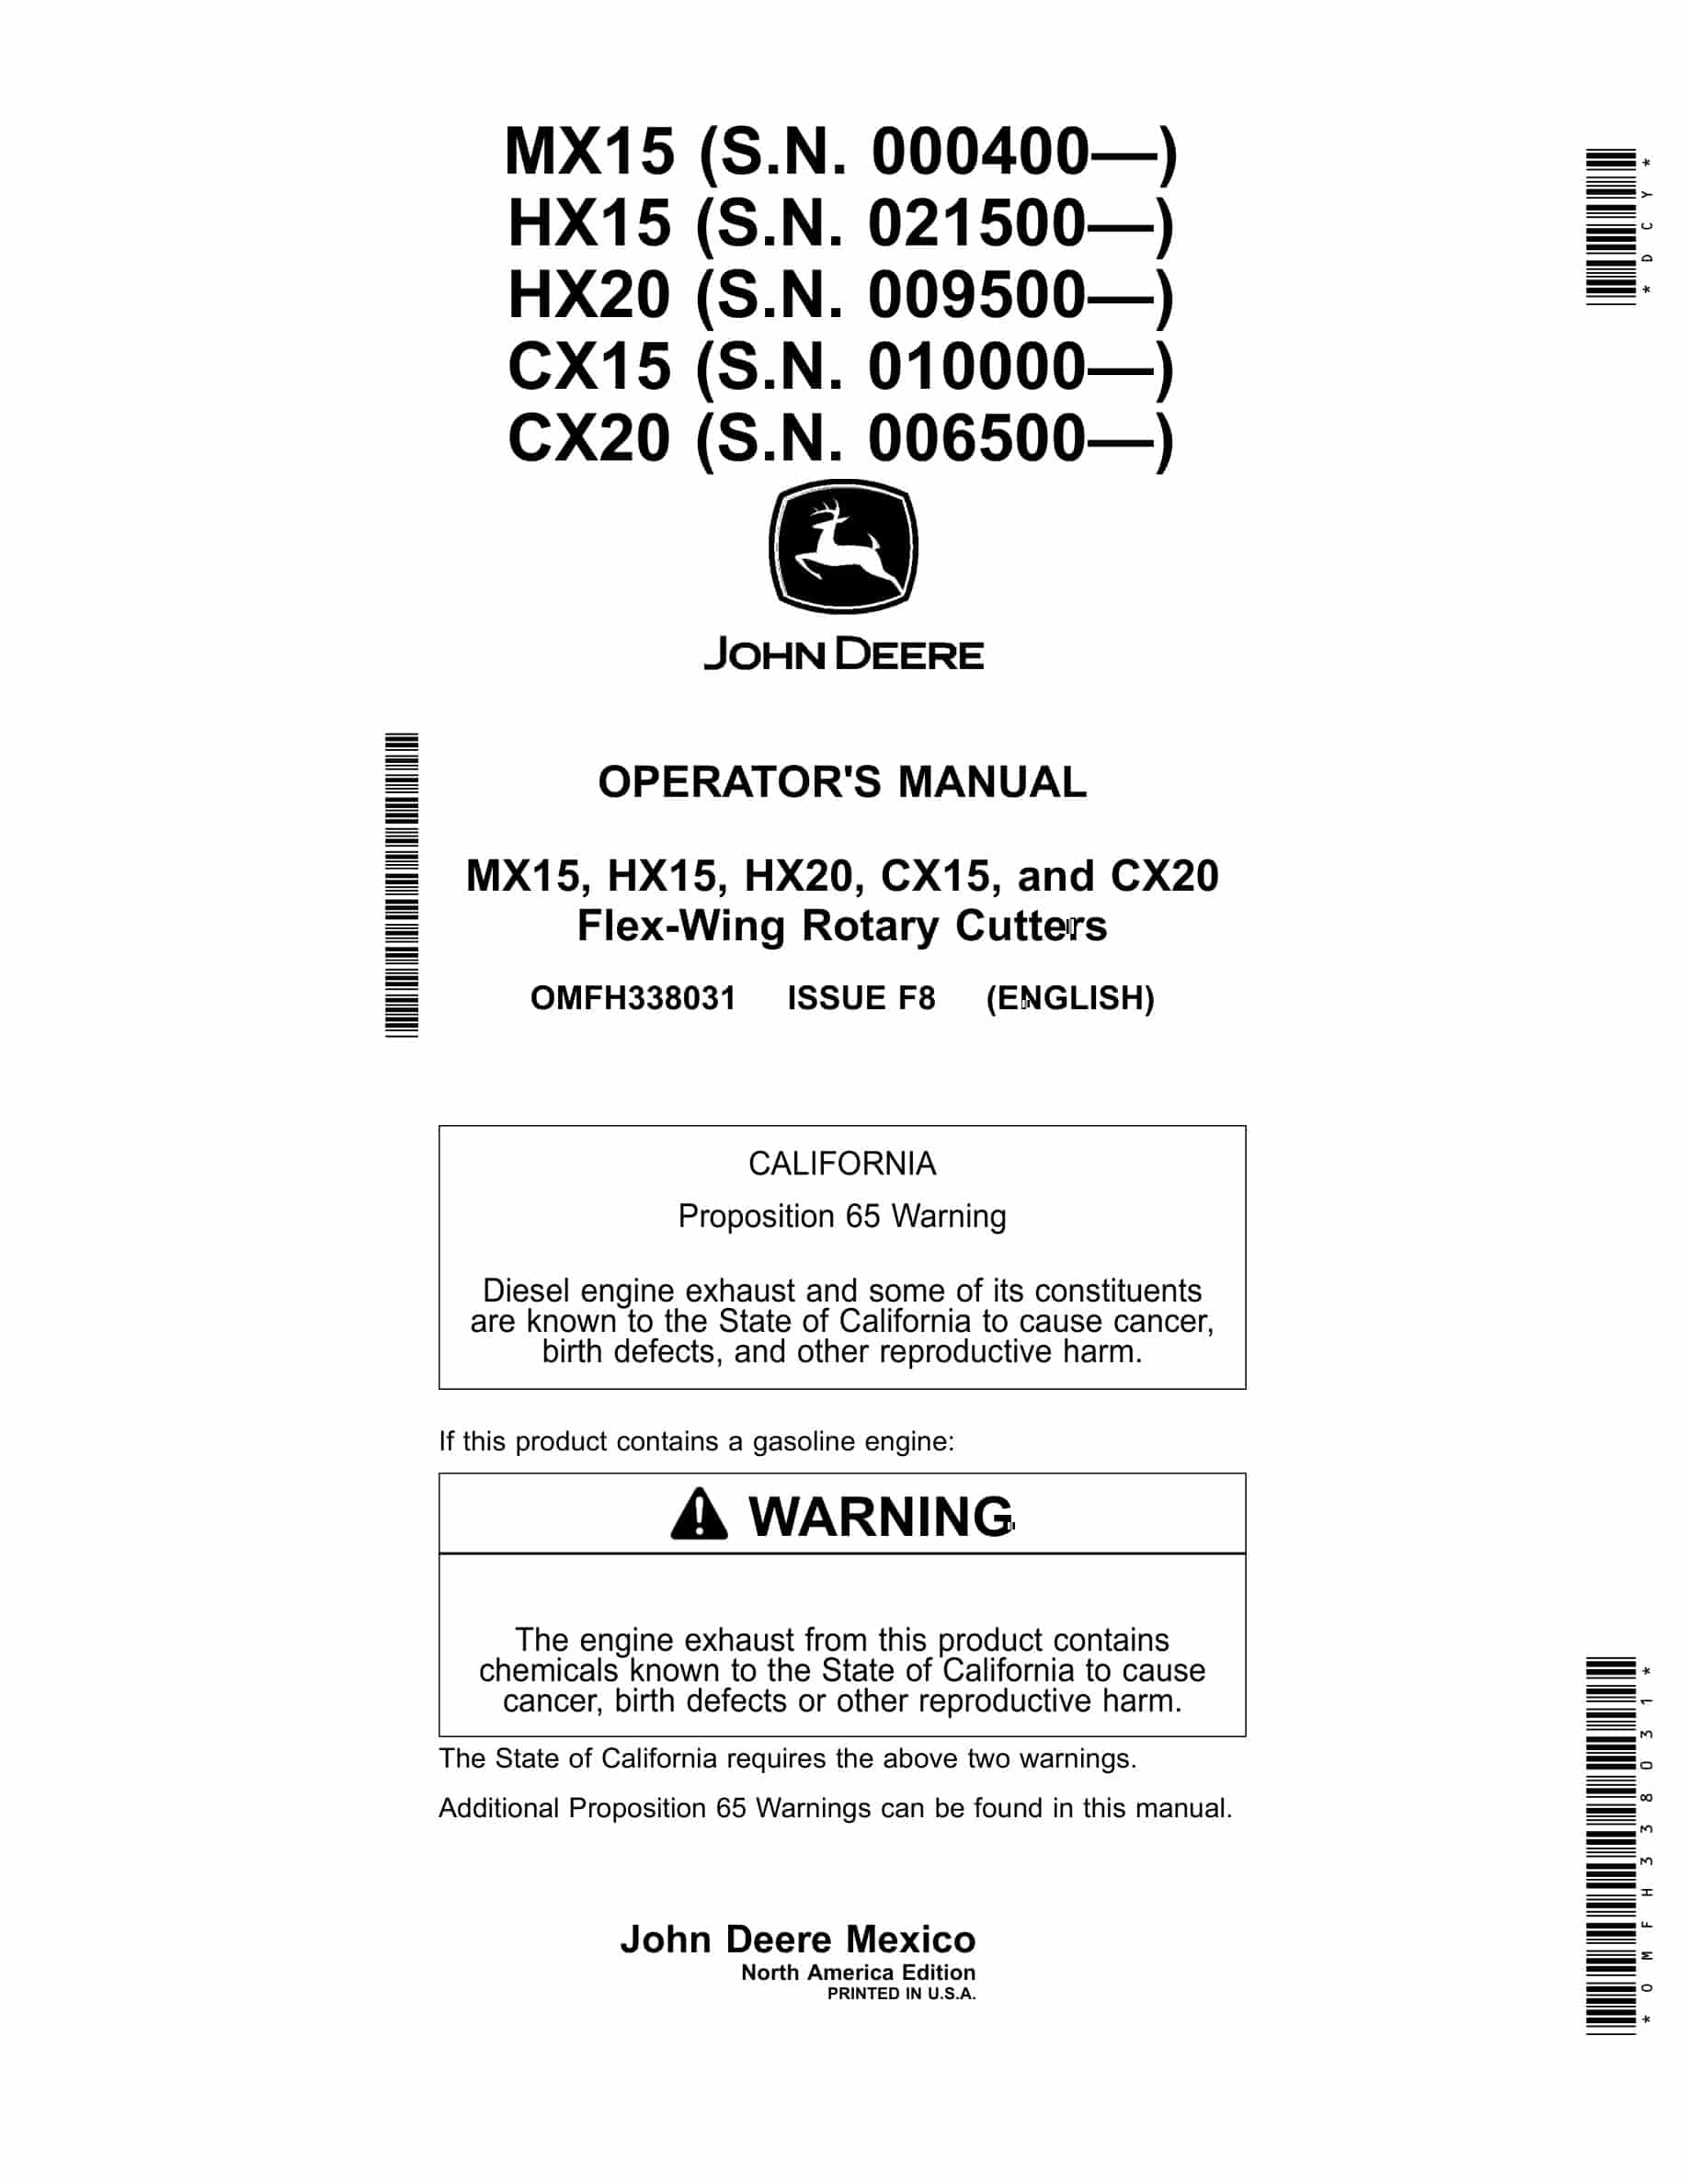 John Deere MX15, HX15, HX20, CX15, and CX20 Flex-Wing Rotary Cutter Operator Manual OMFH338031-1